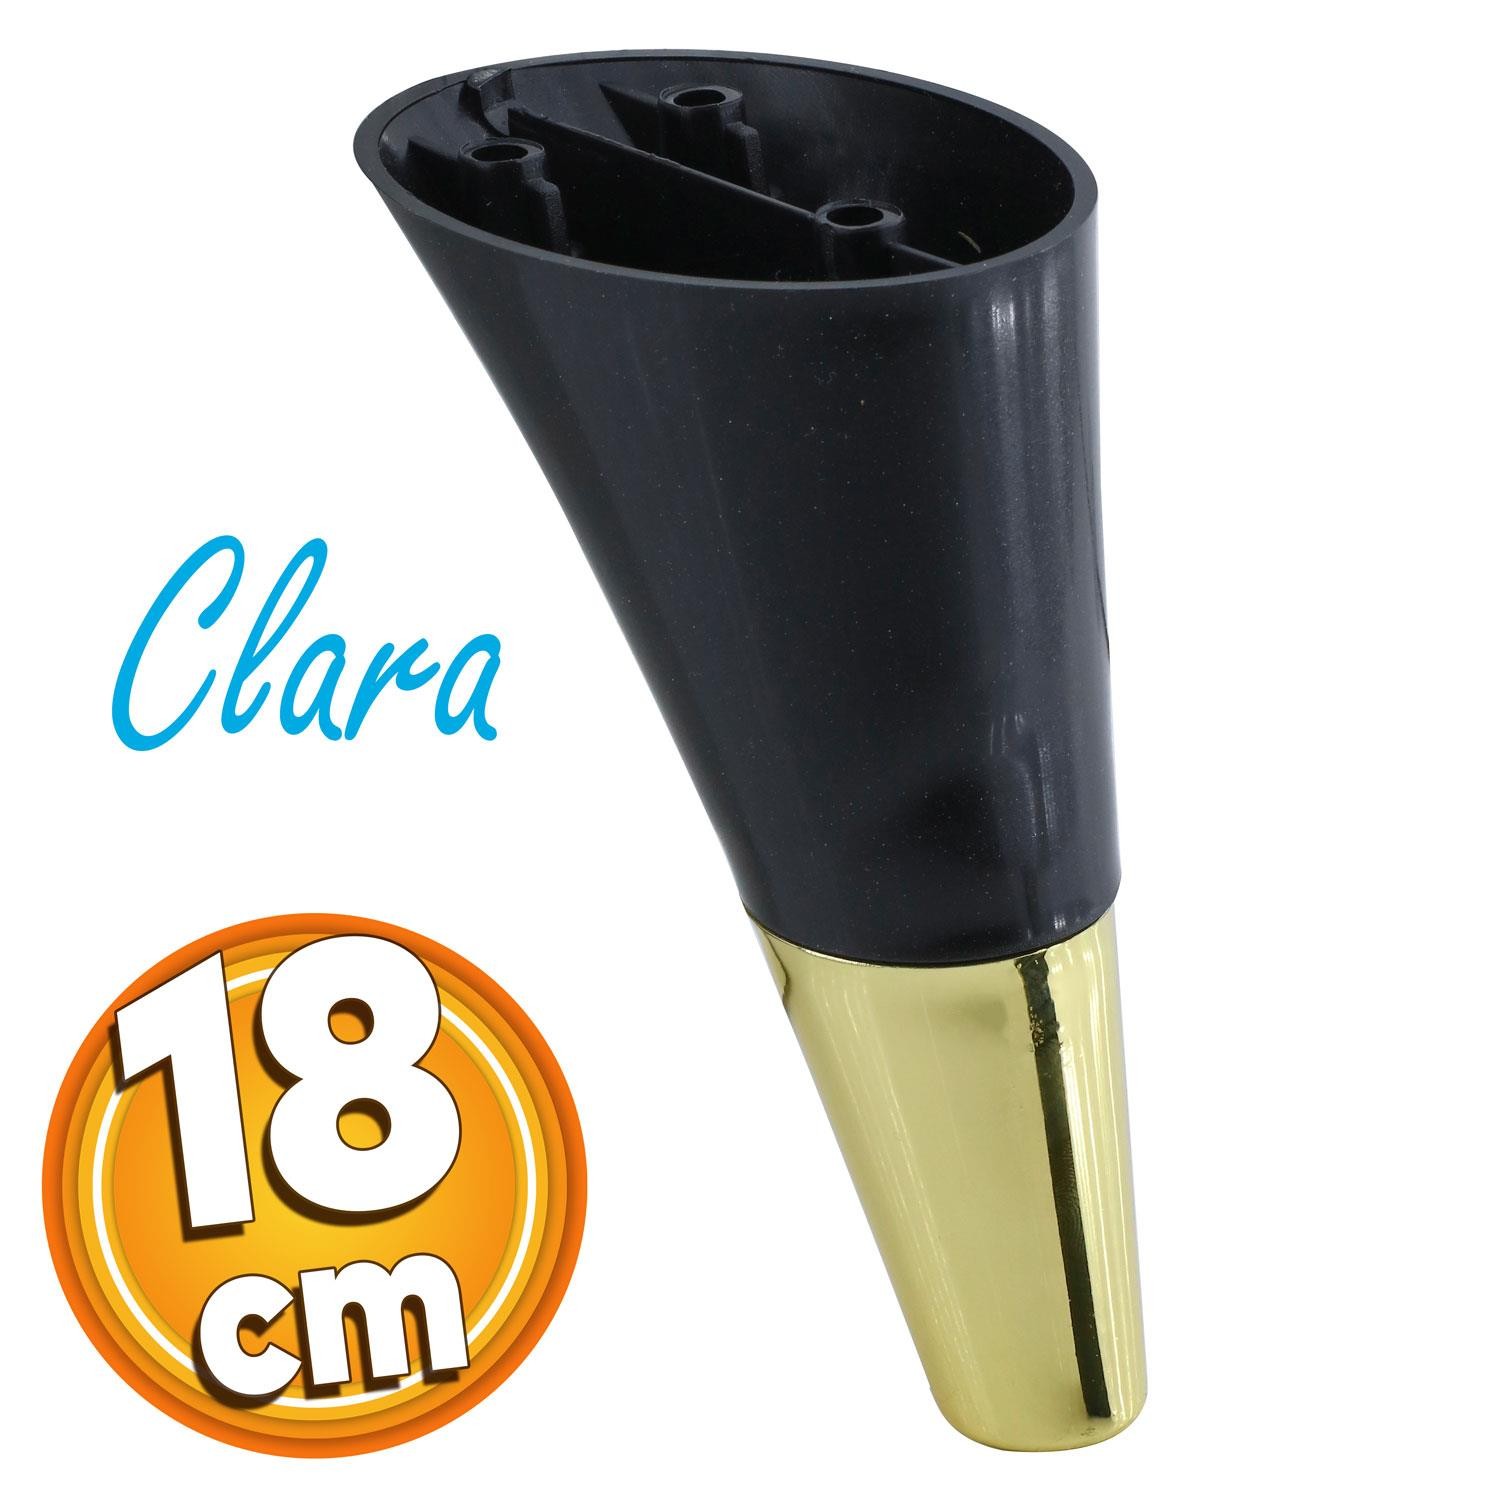 Clara Mobilya Kanepe Sehpa TV Ünitesi Baza Koltuk Ayağı Siyah Gold Renk 18 cm Ayak